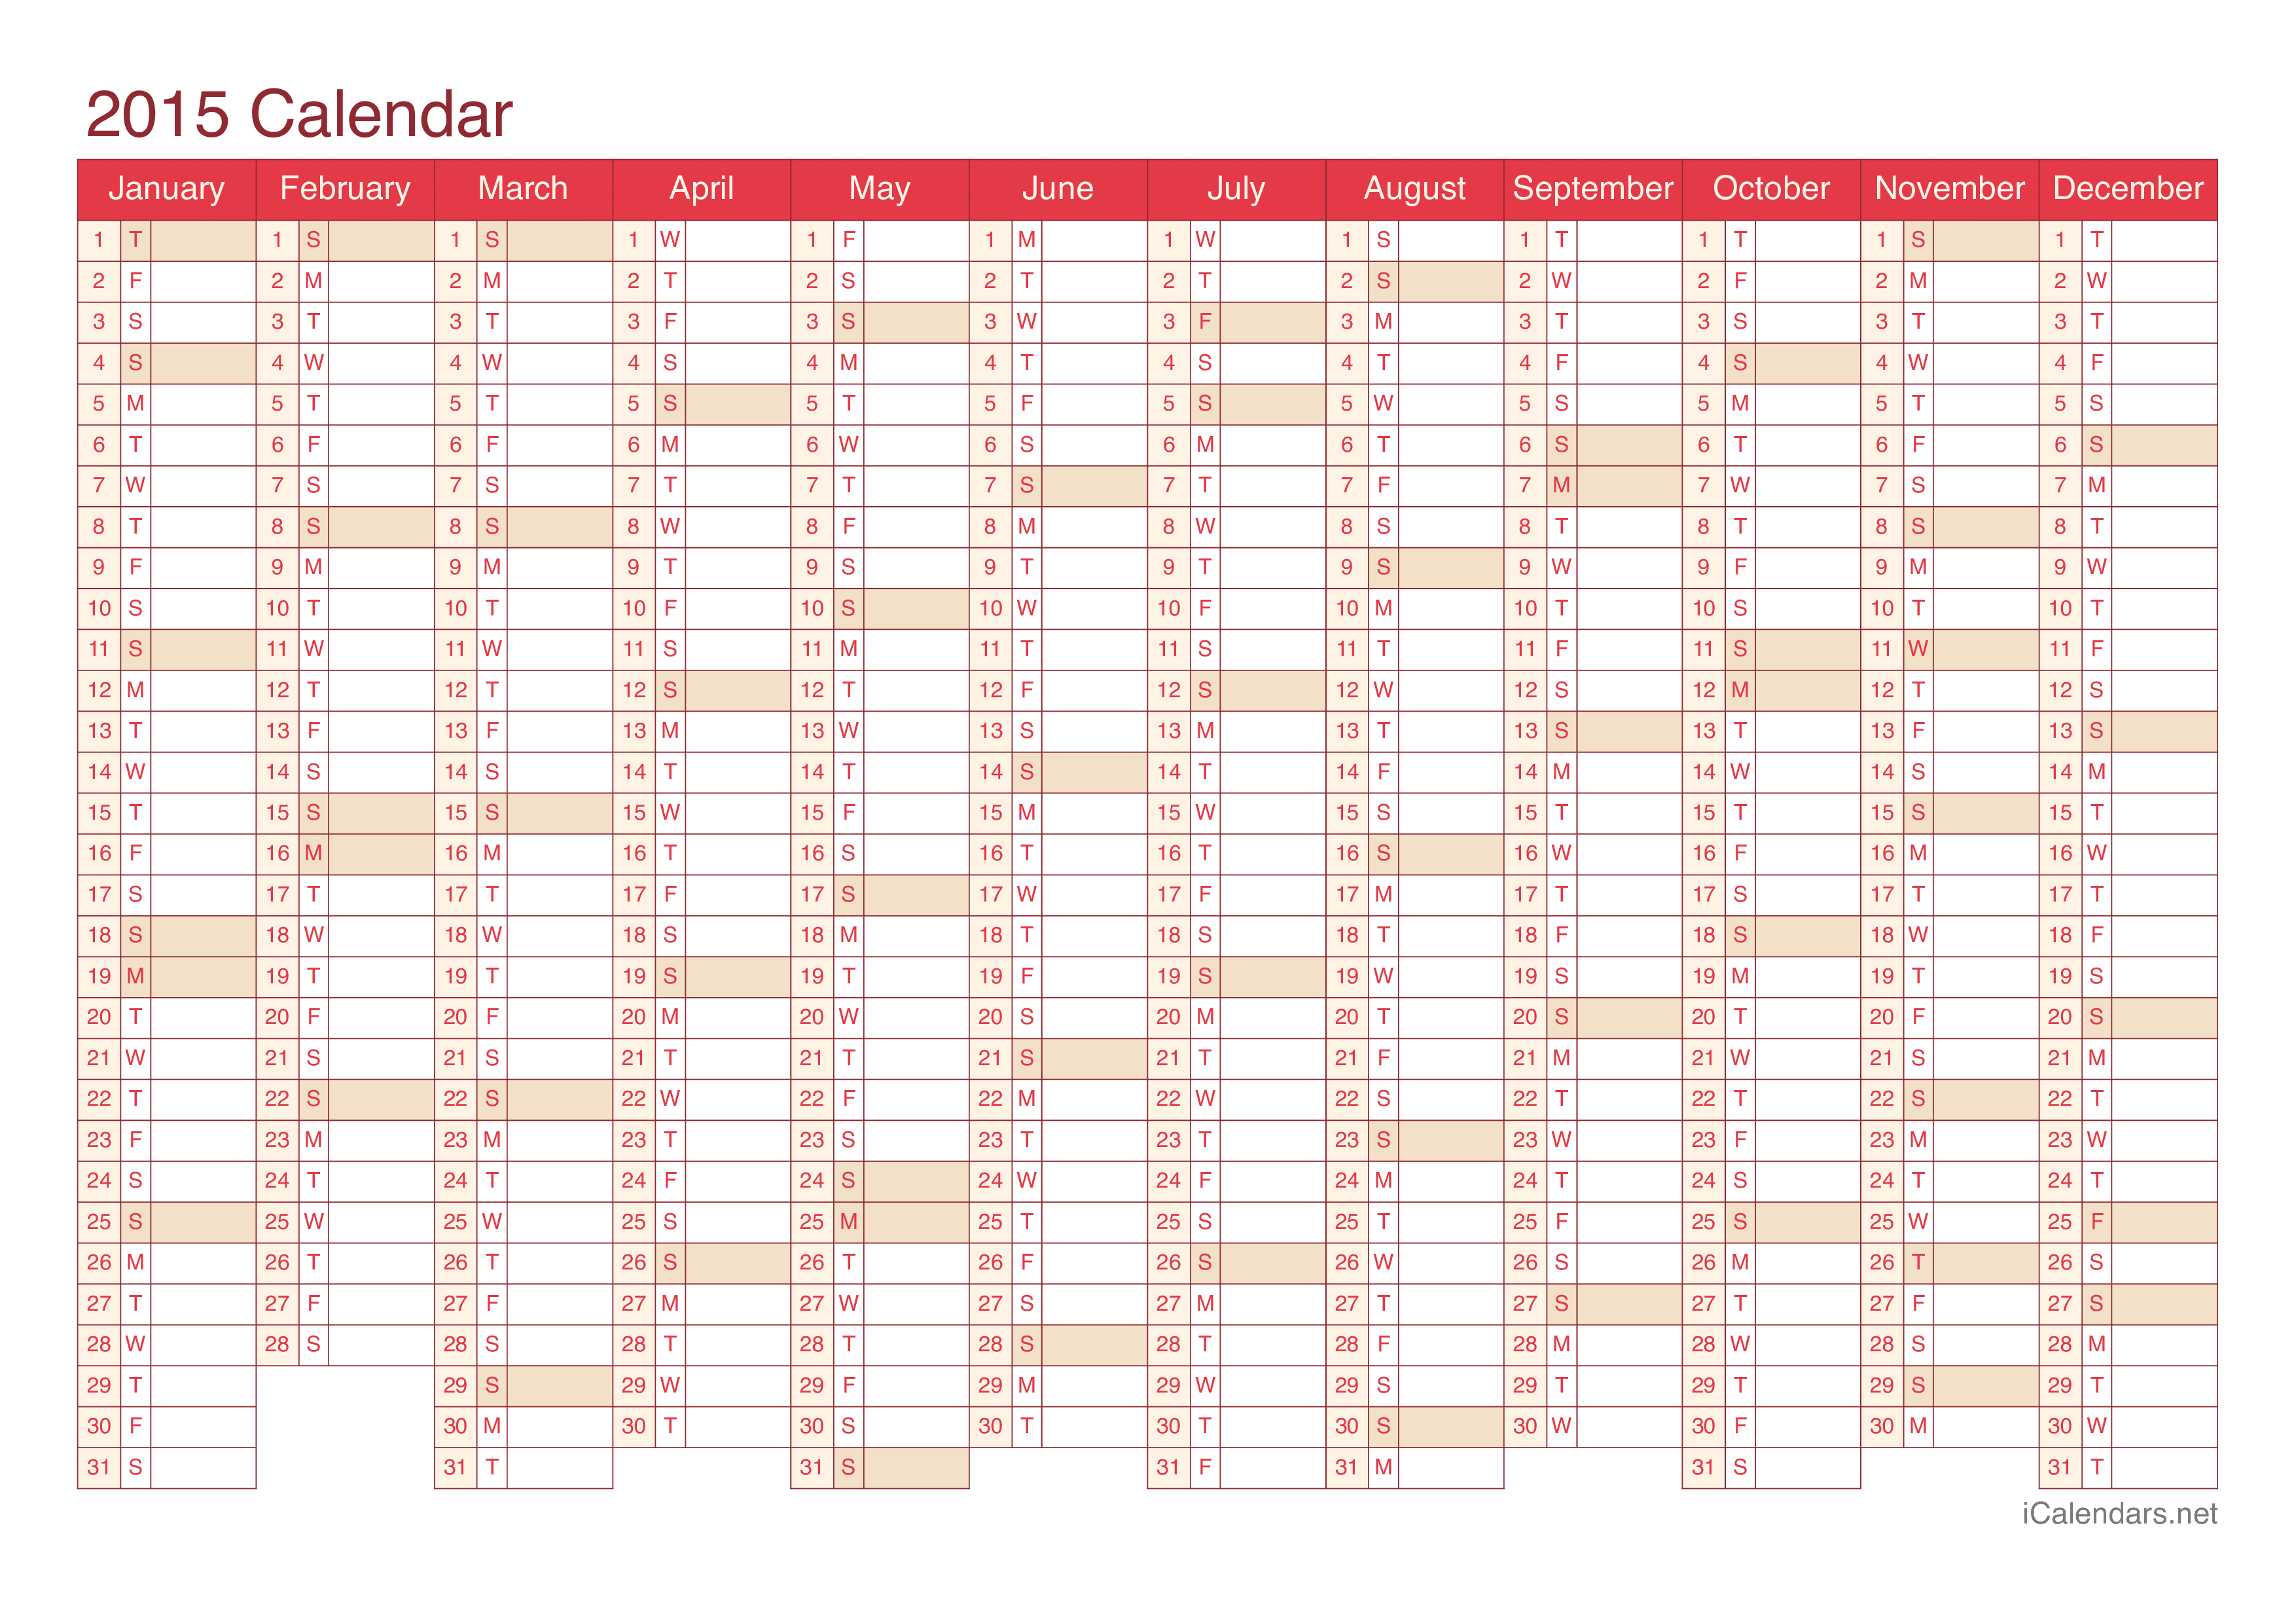 2015 Calendar - Cherry